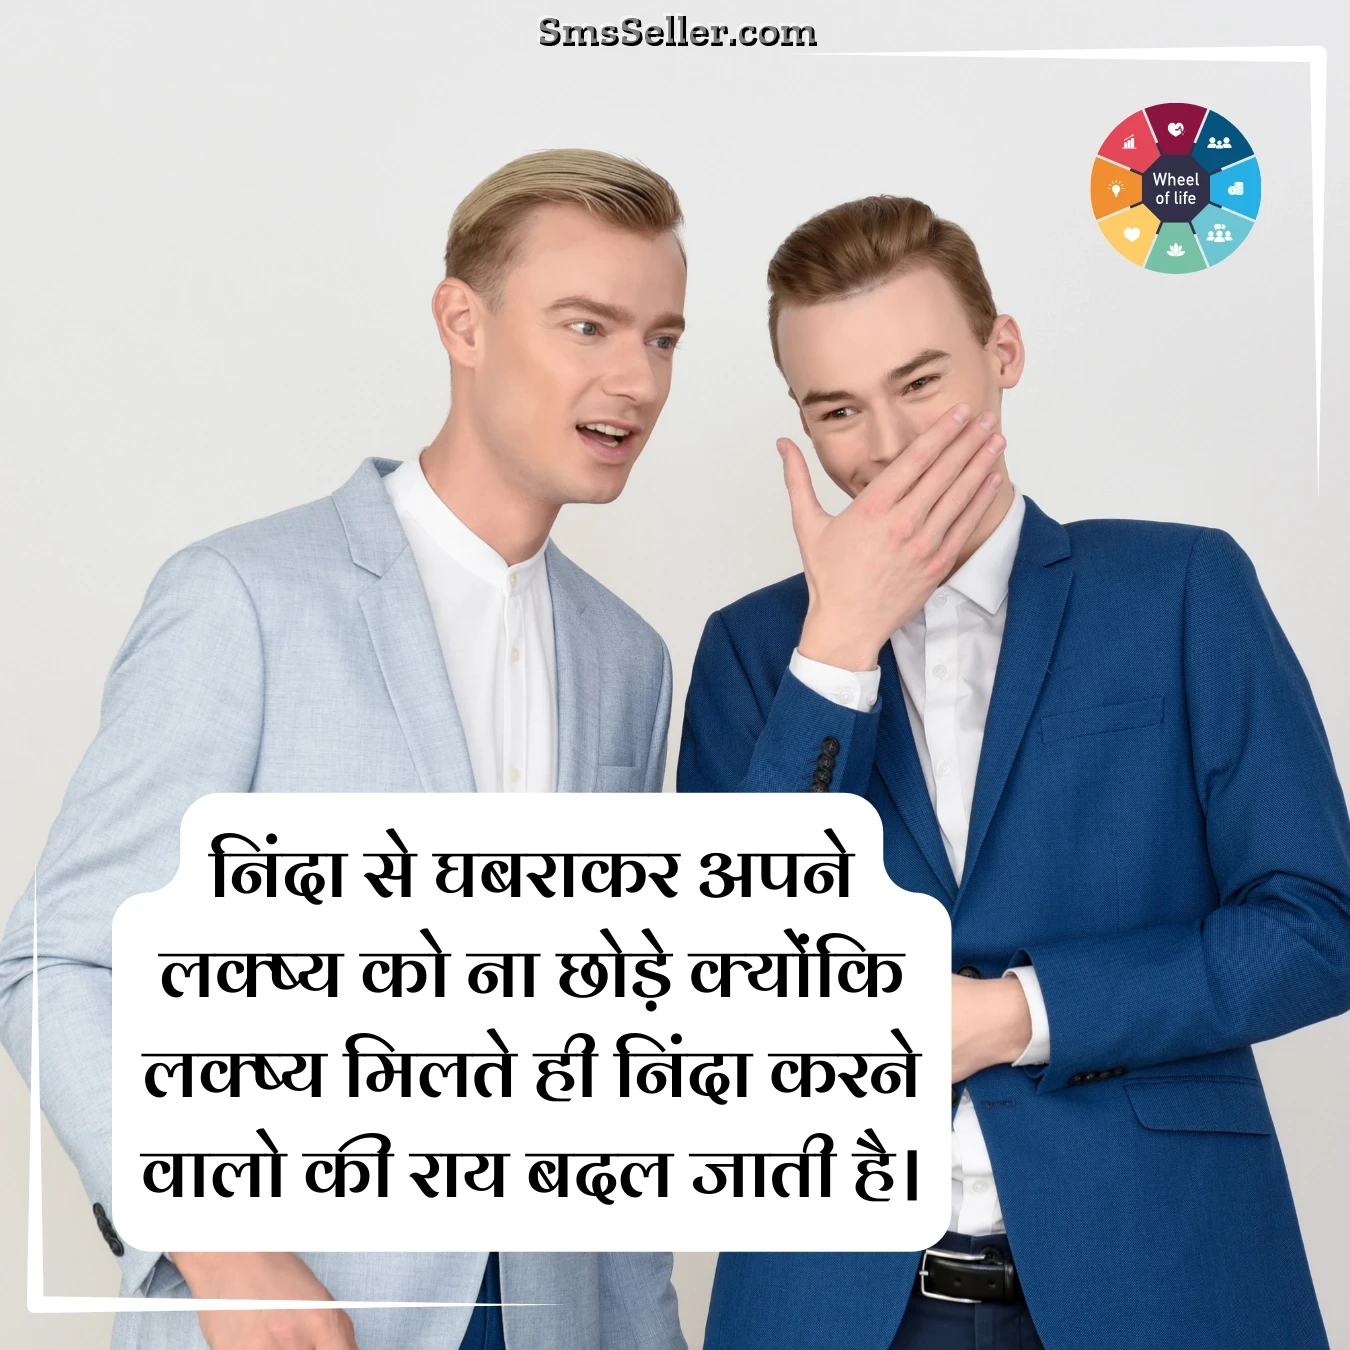 unique quotes in hindi ninda lakshy vichlit mat